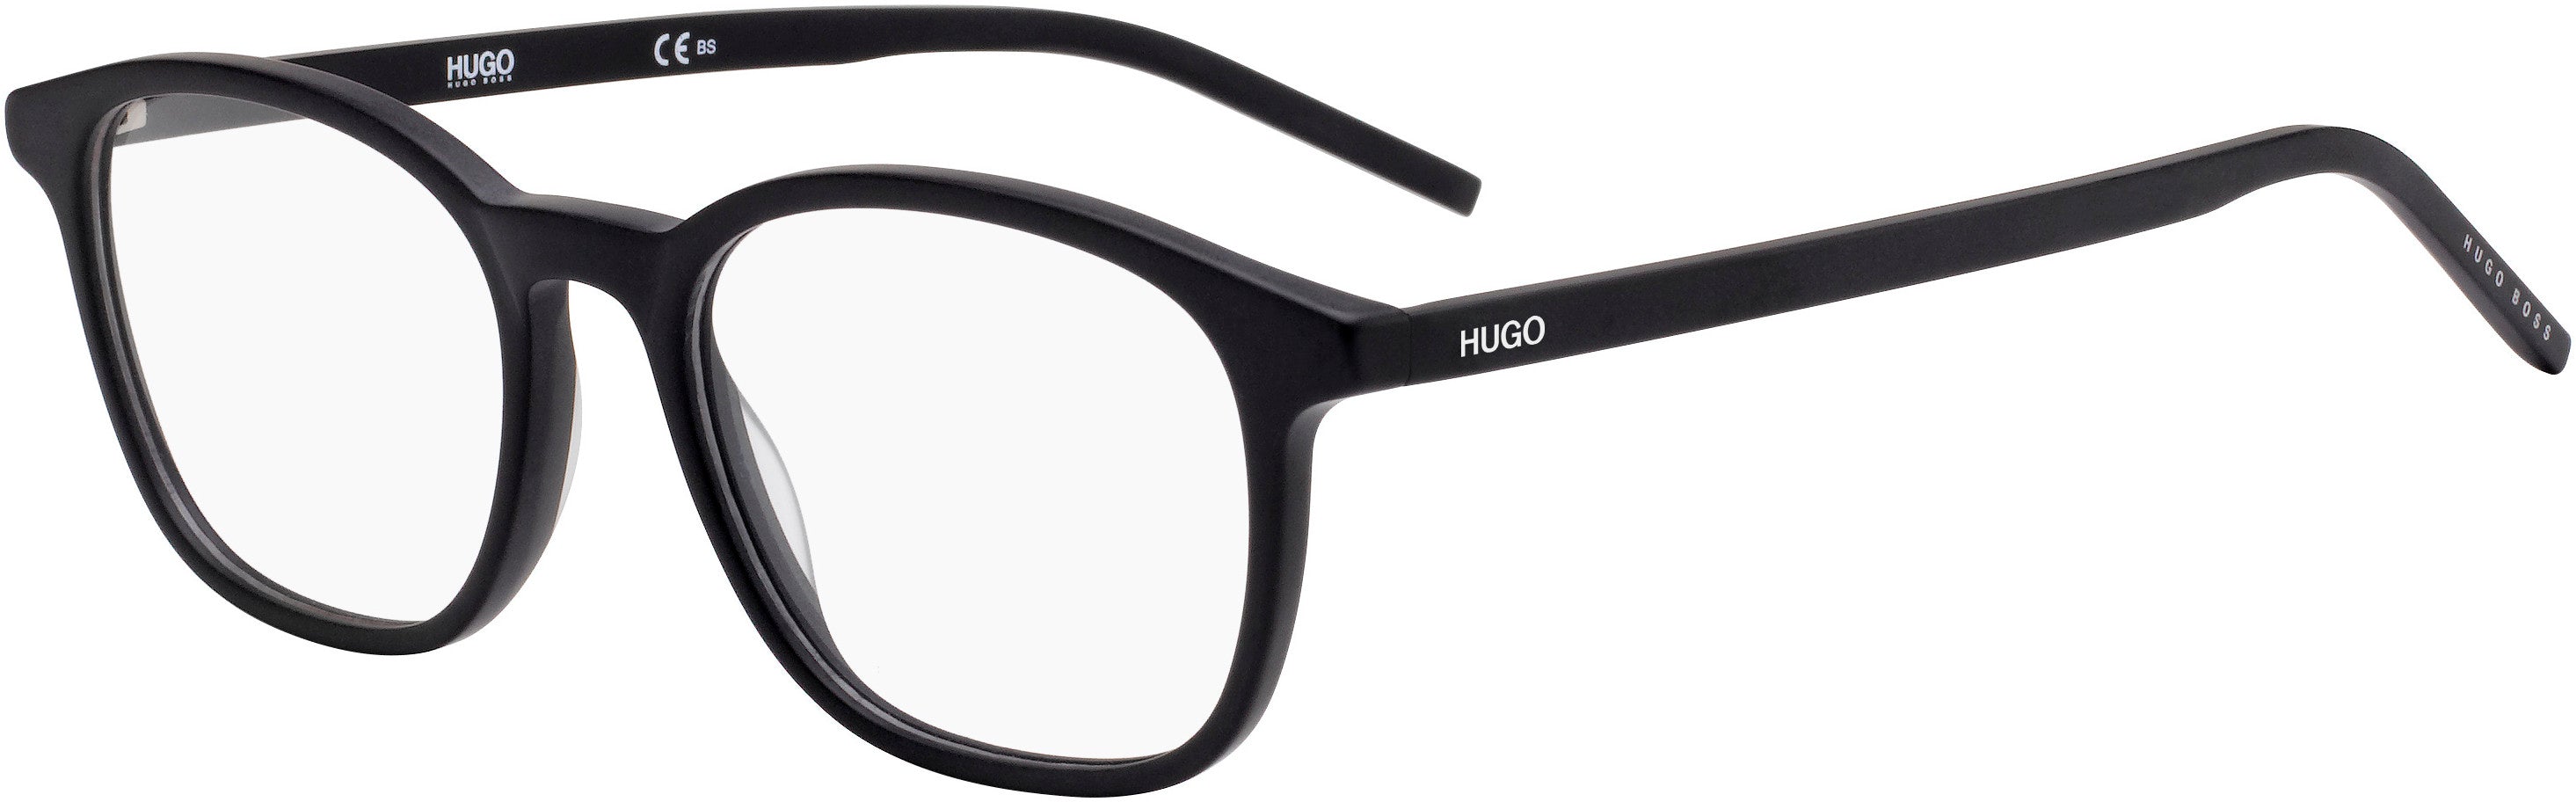 Hugo (hug) Hugo 1024 Square Eyeglasses 0003-0003  Matte Black (00 Demo Lens)